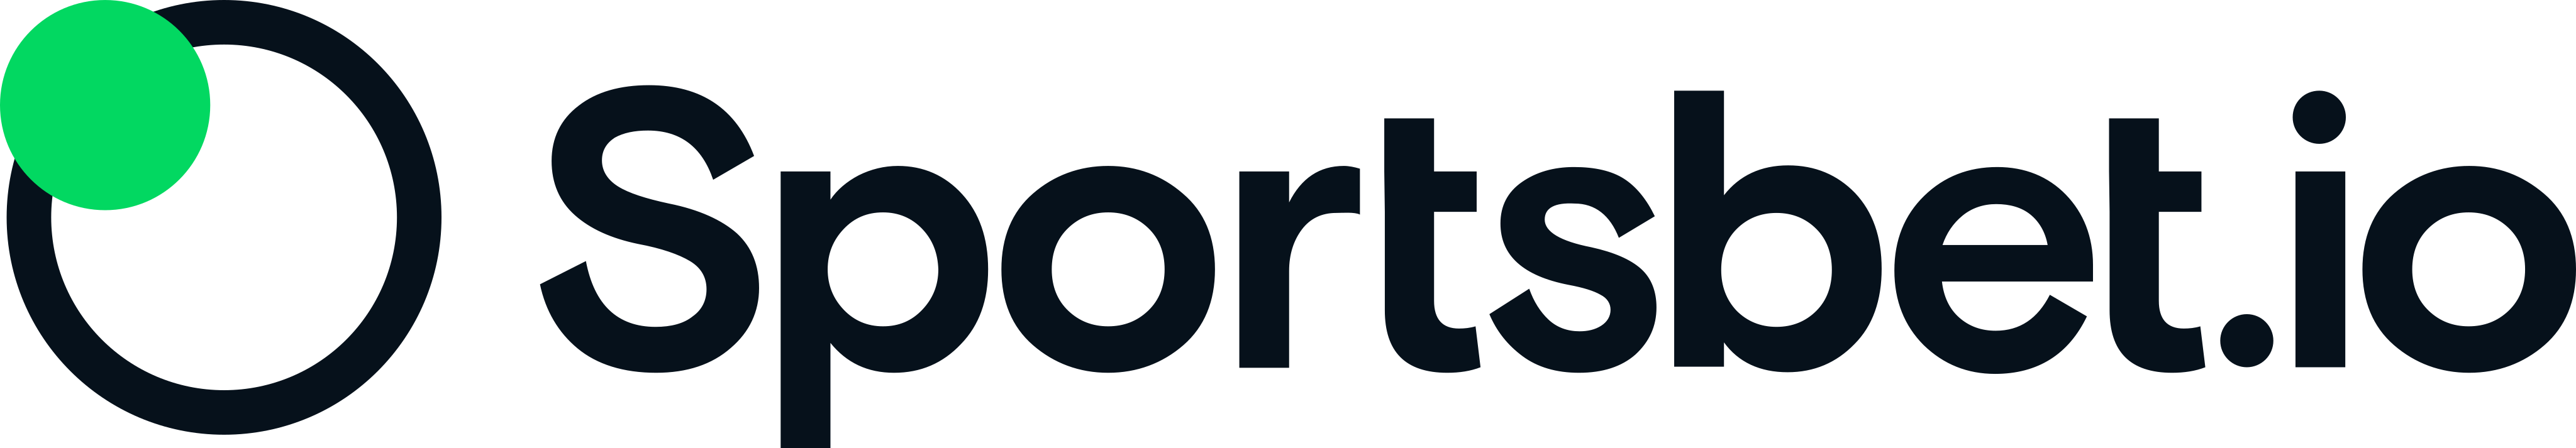 sportsbet.io casino logo